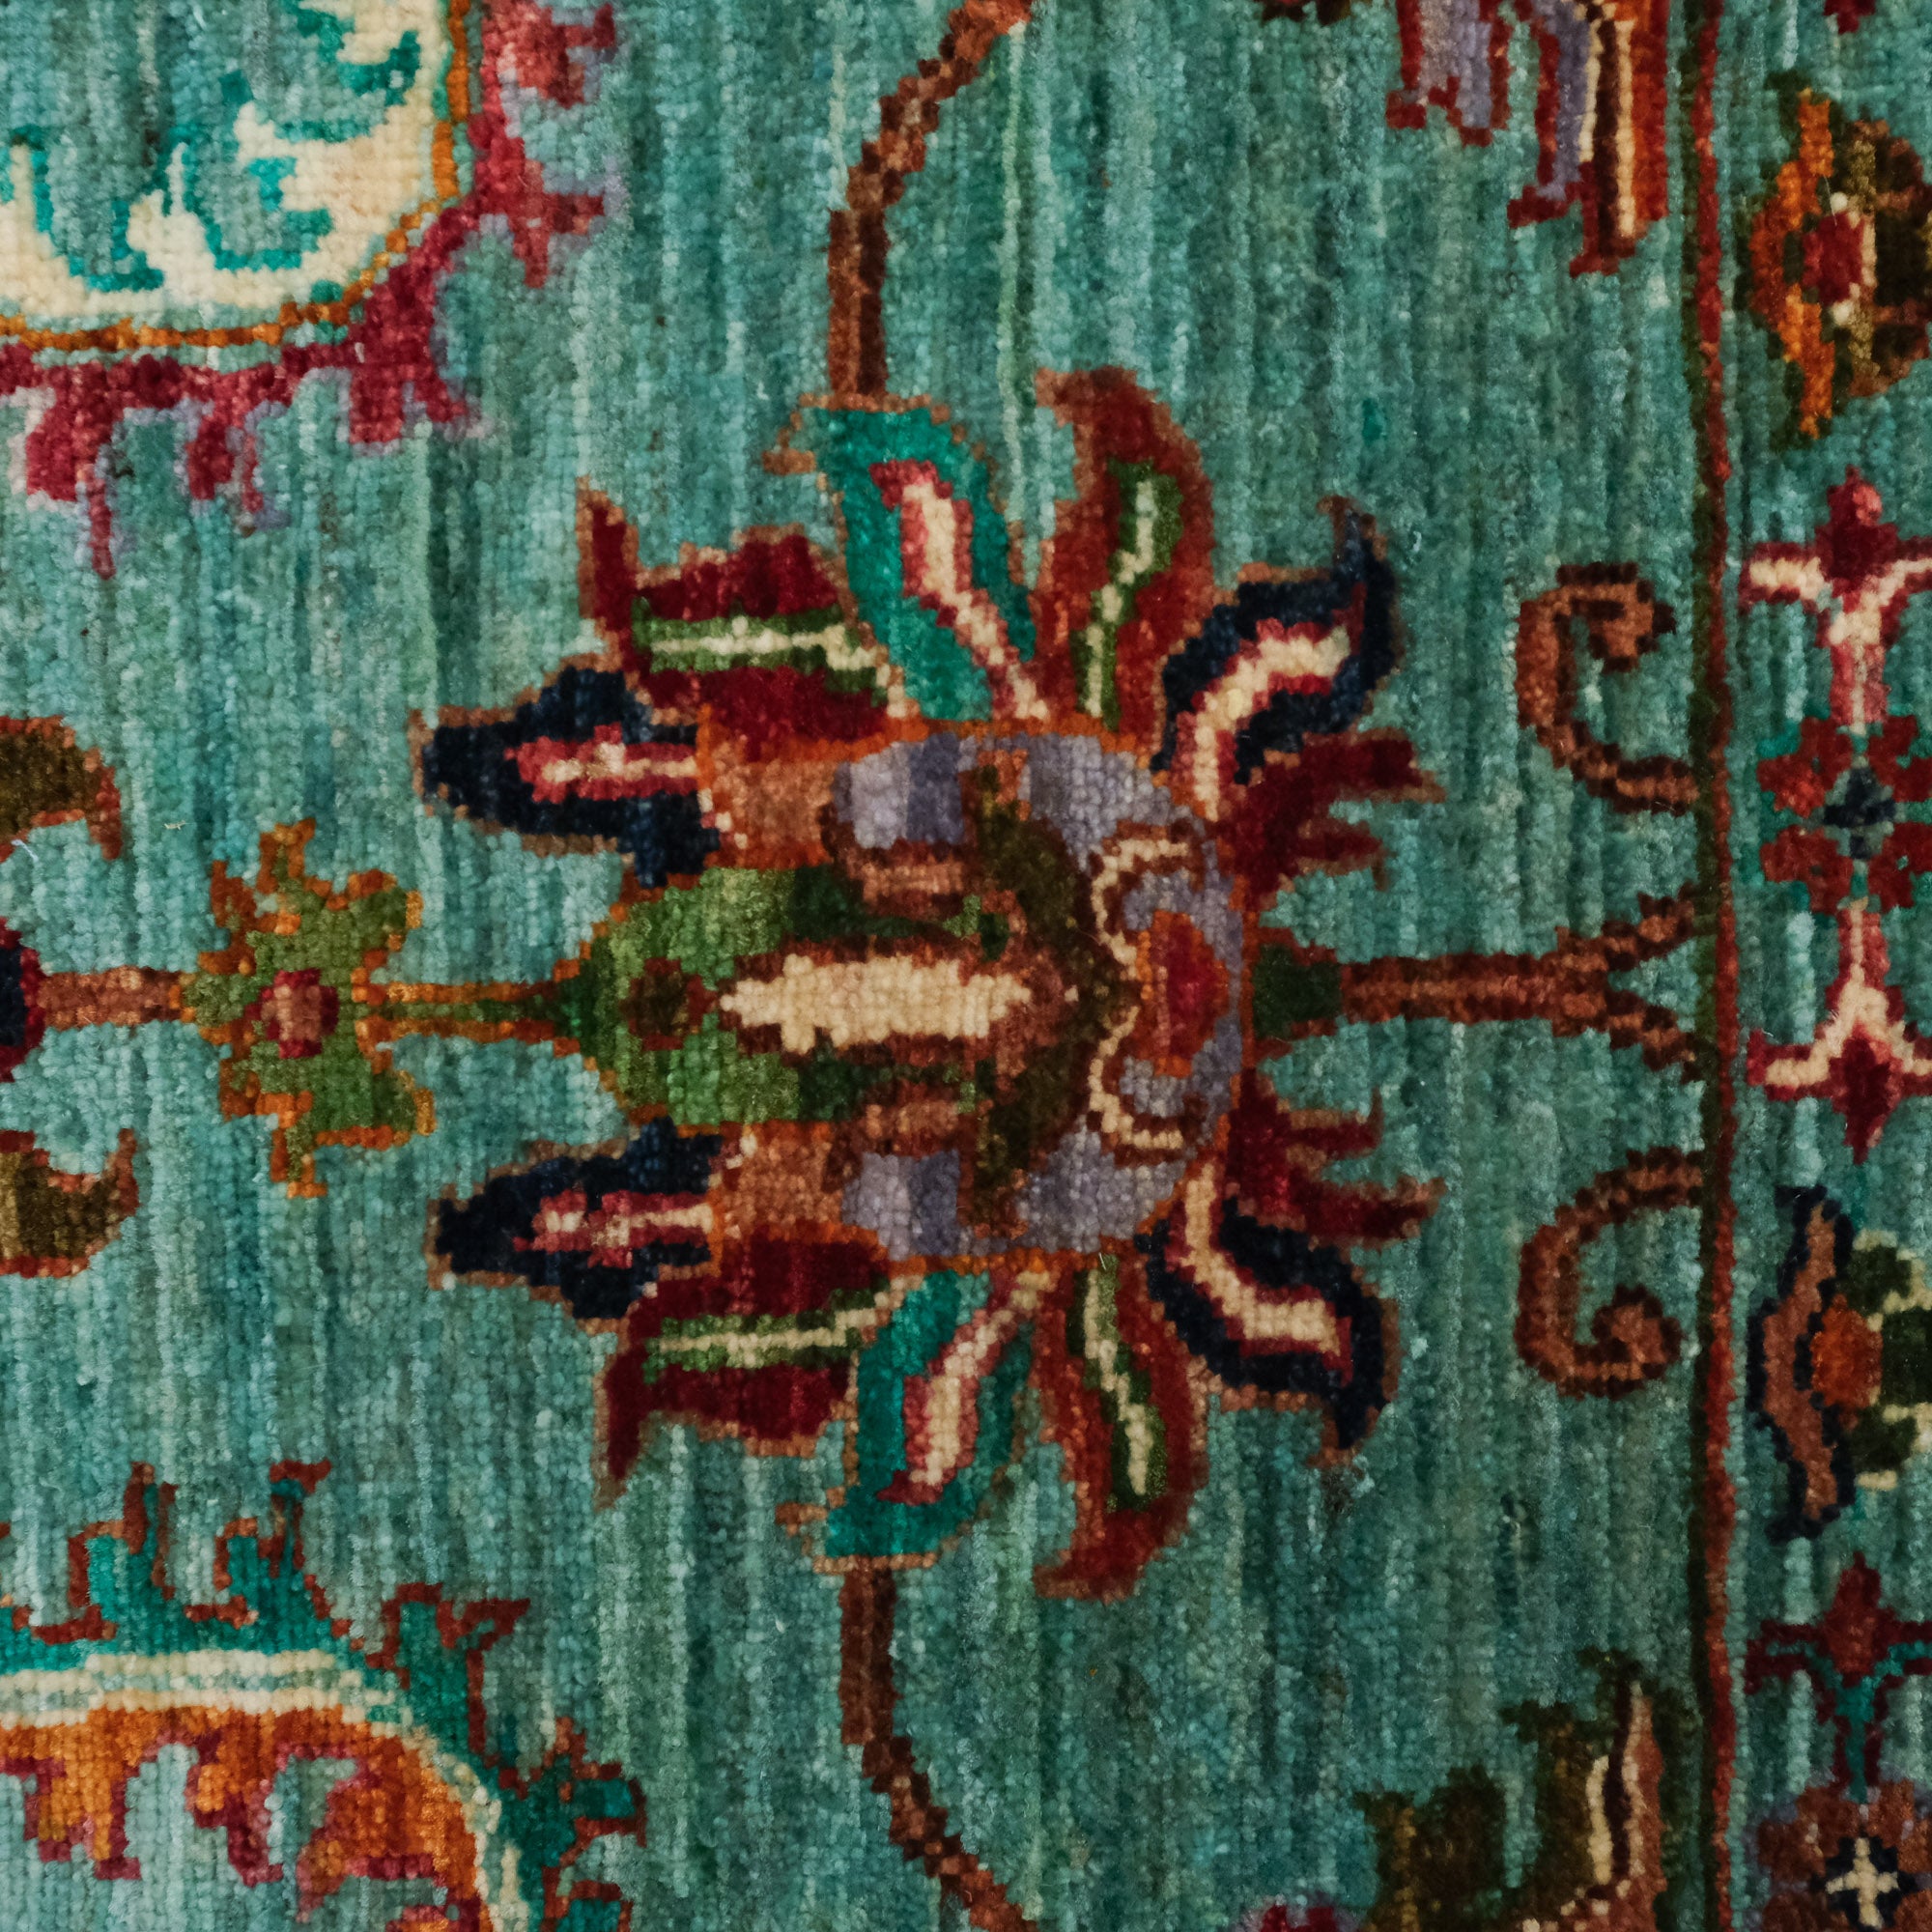 Şahzade Series Hand-Woven Uşak Patterned Blue Carpet